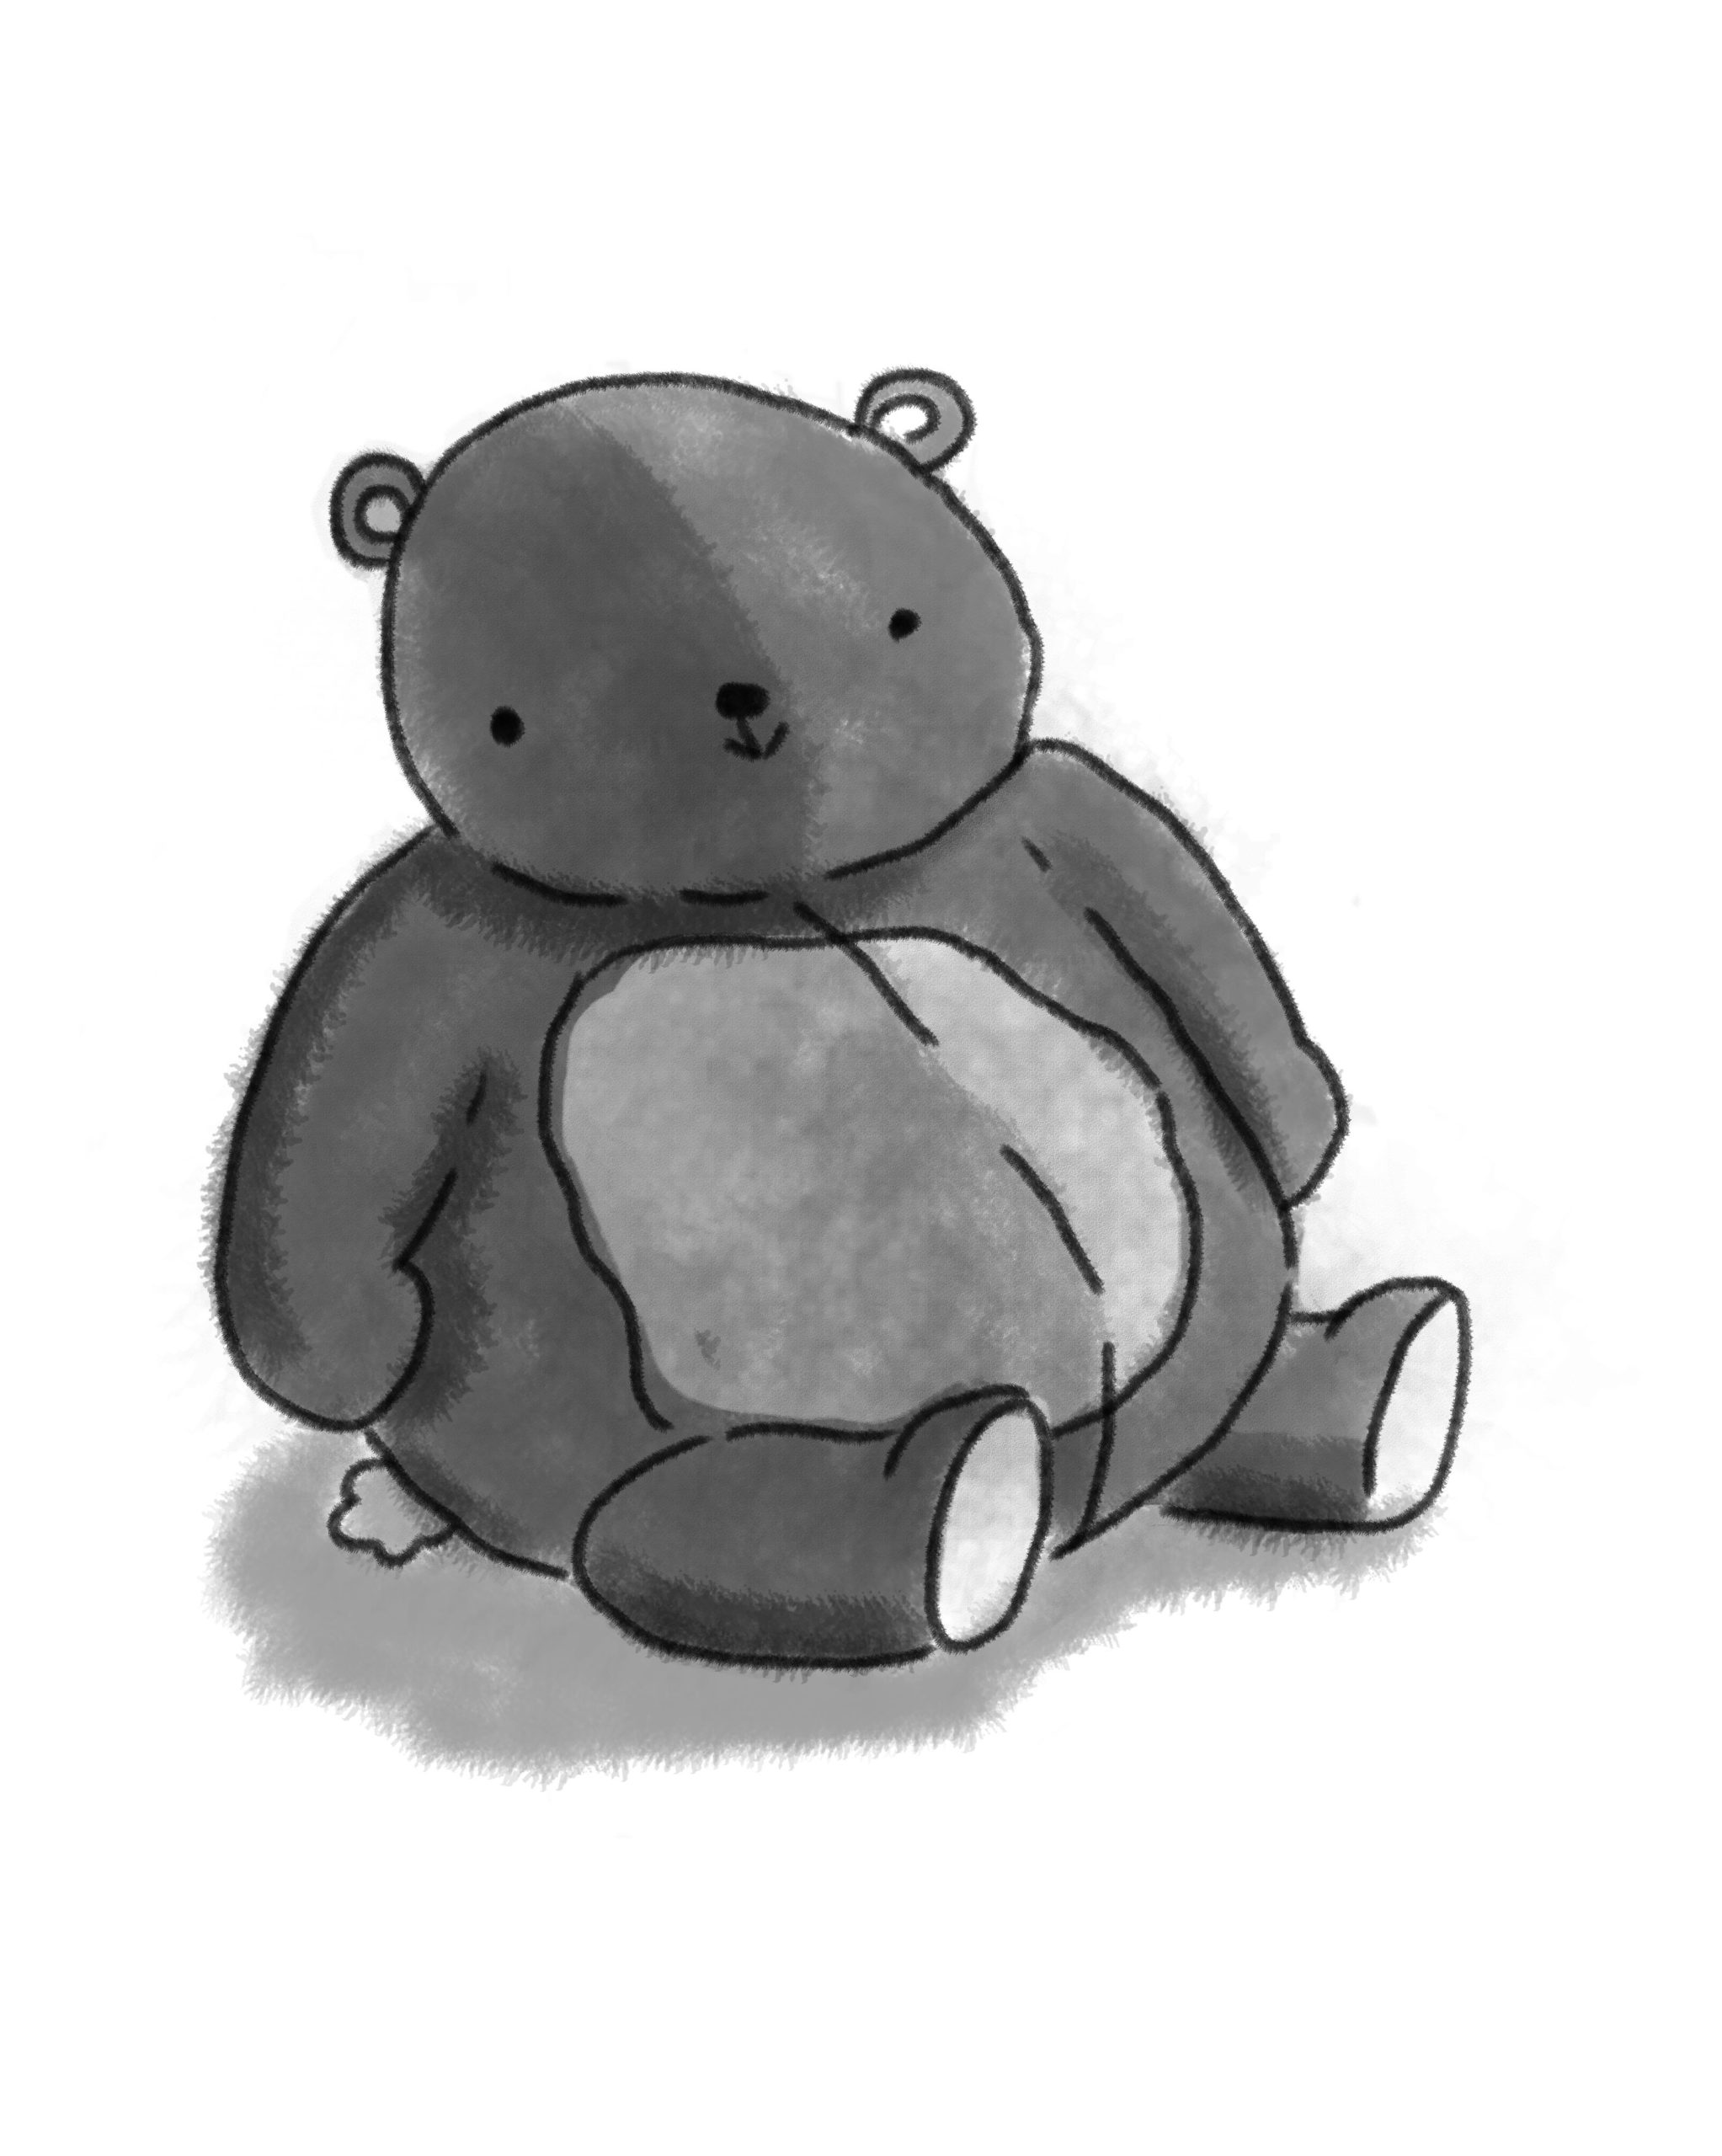 Illustration of a teddy bear.